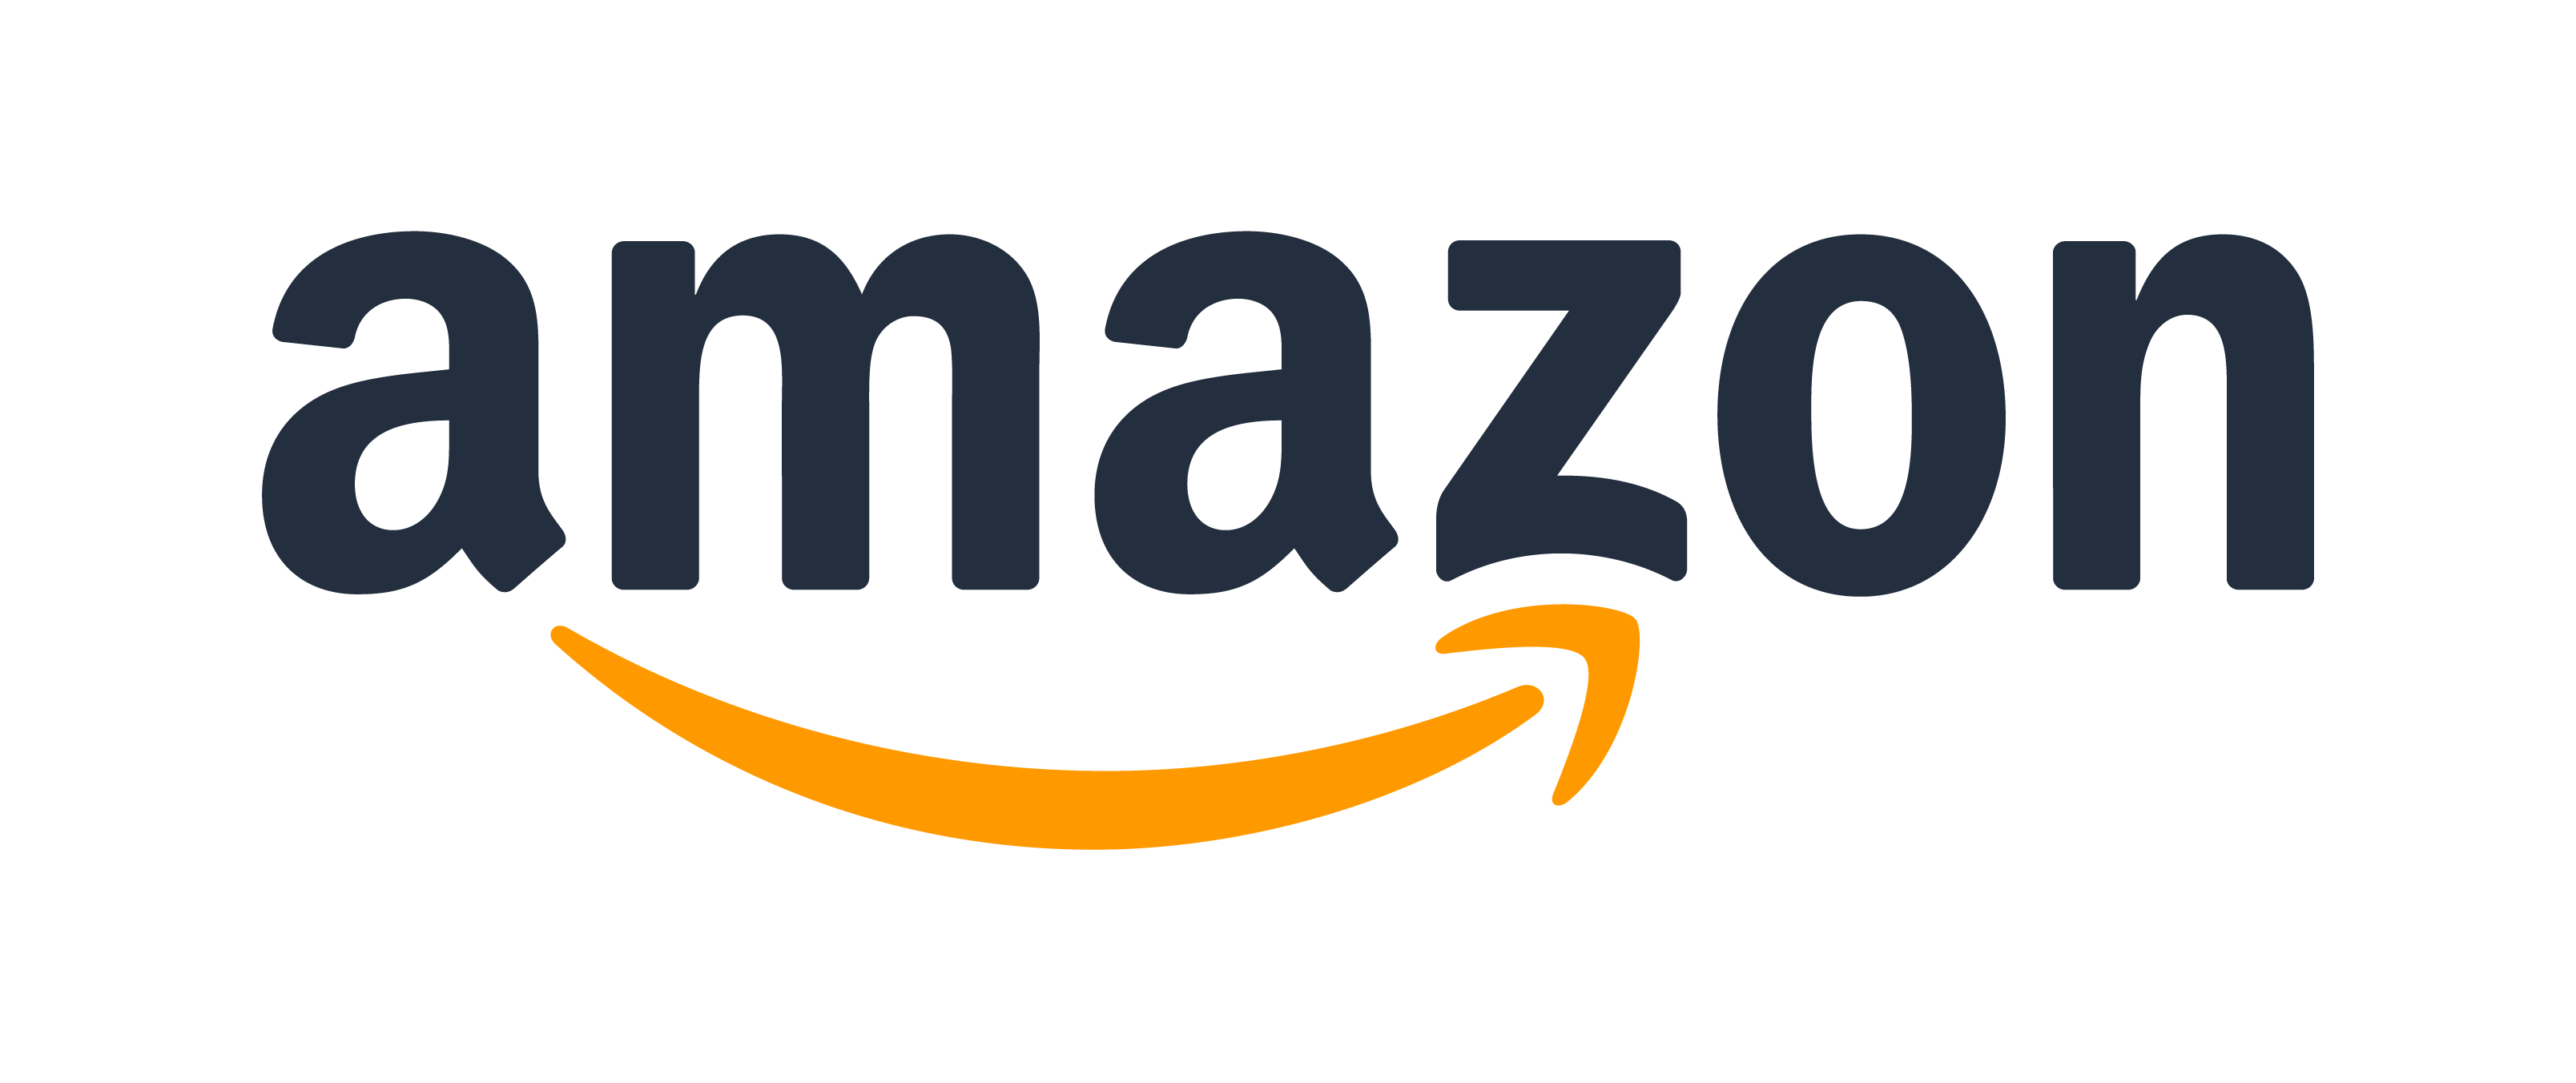 Amazon logo-1